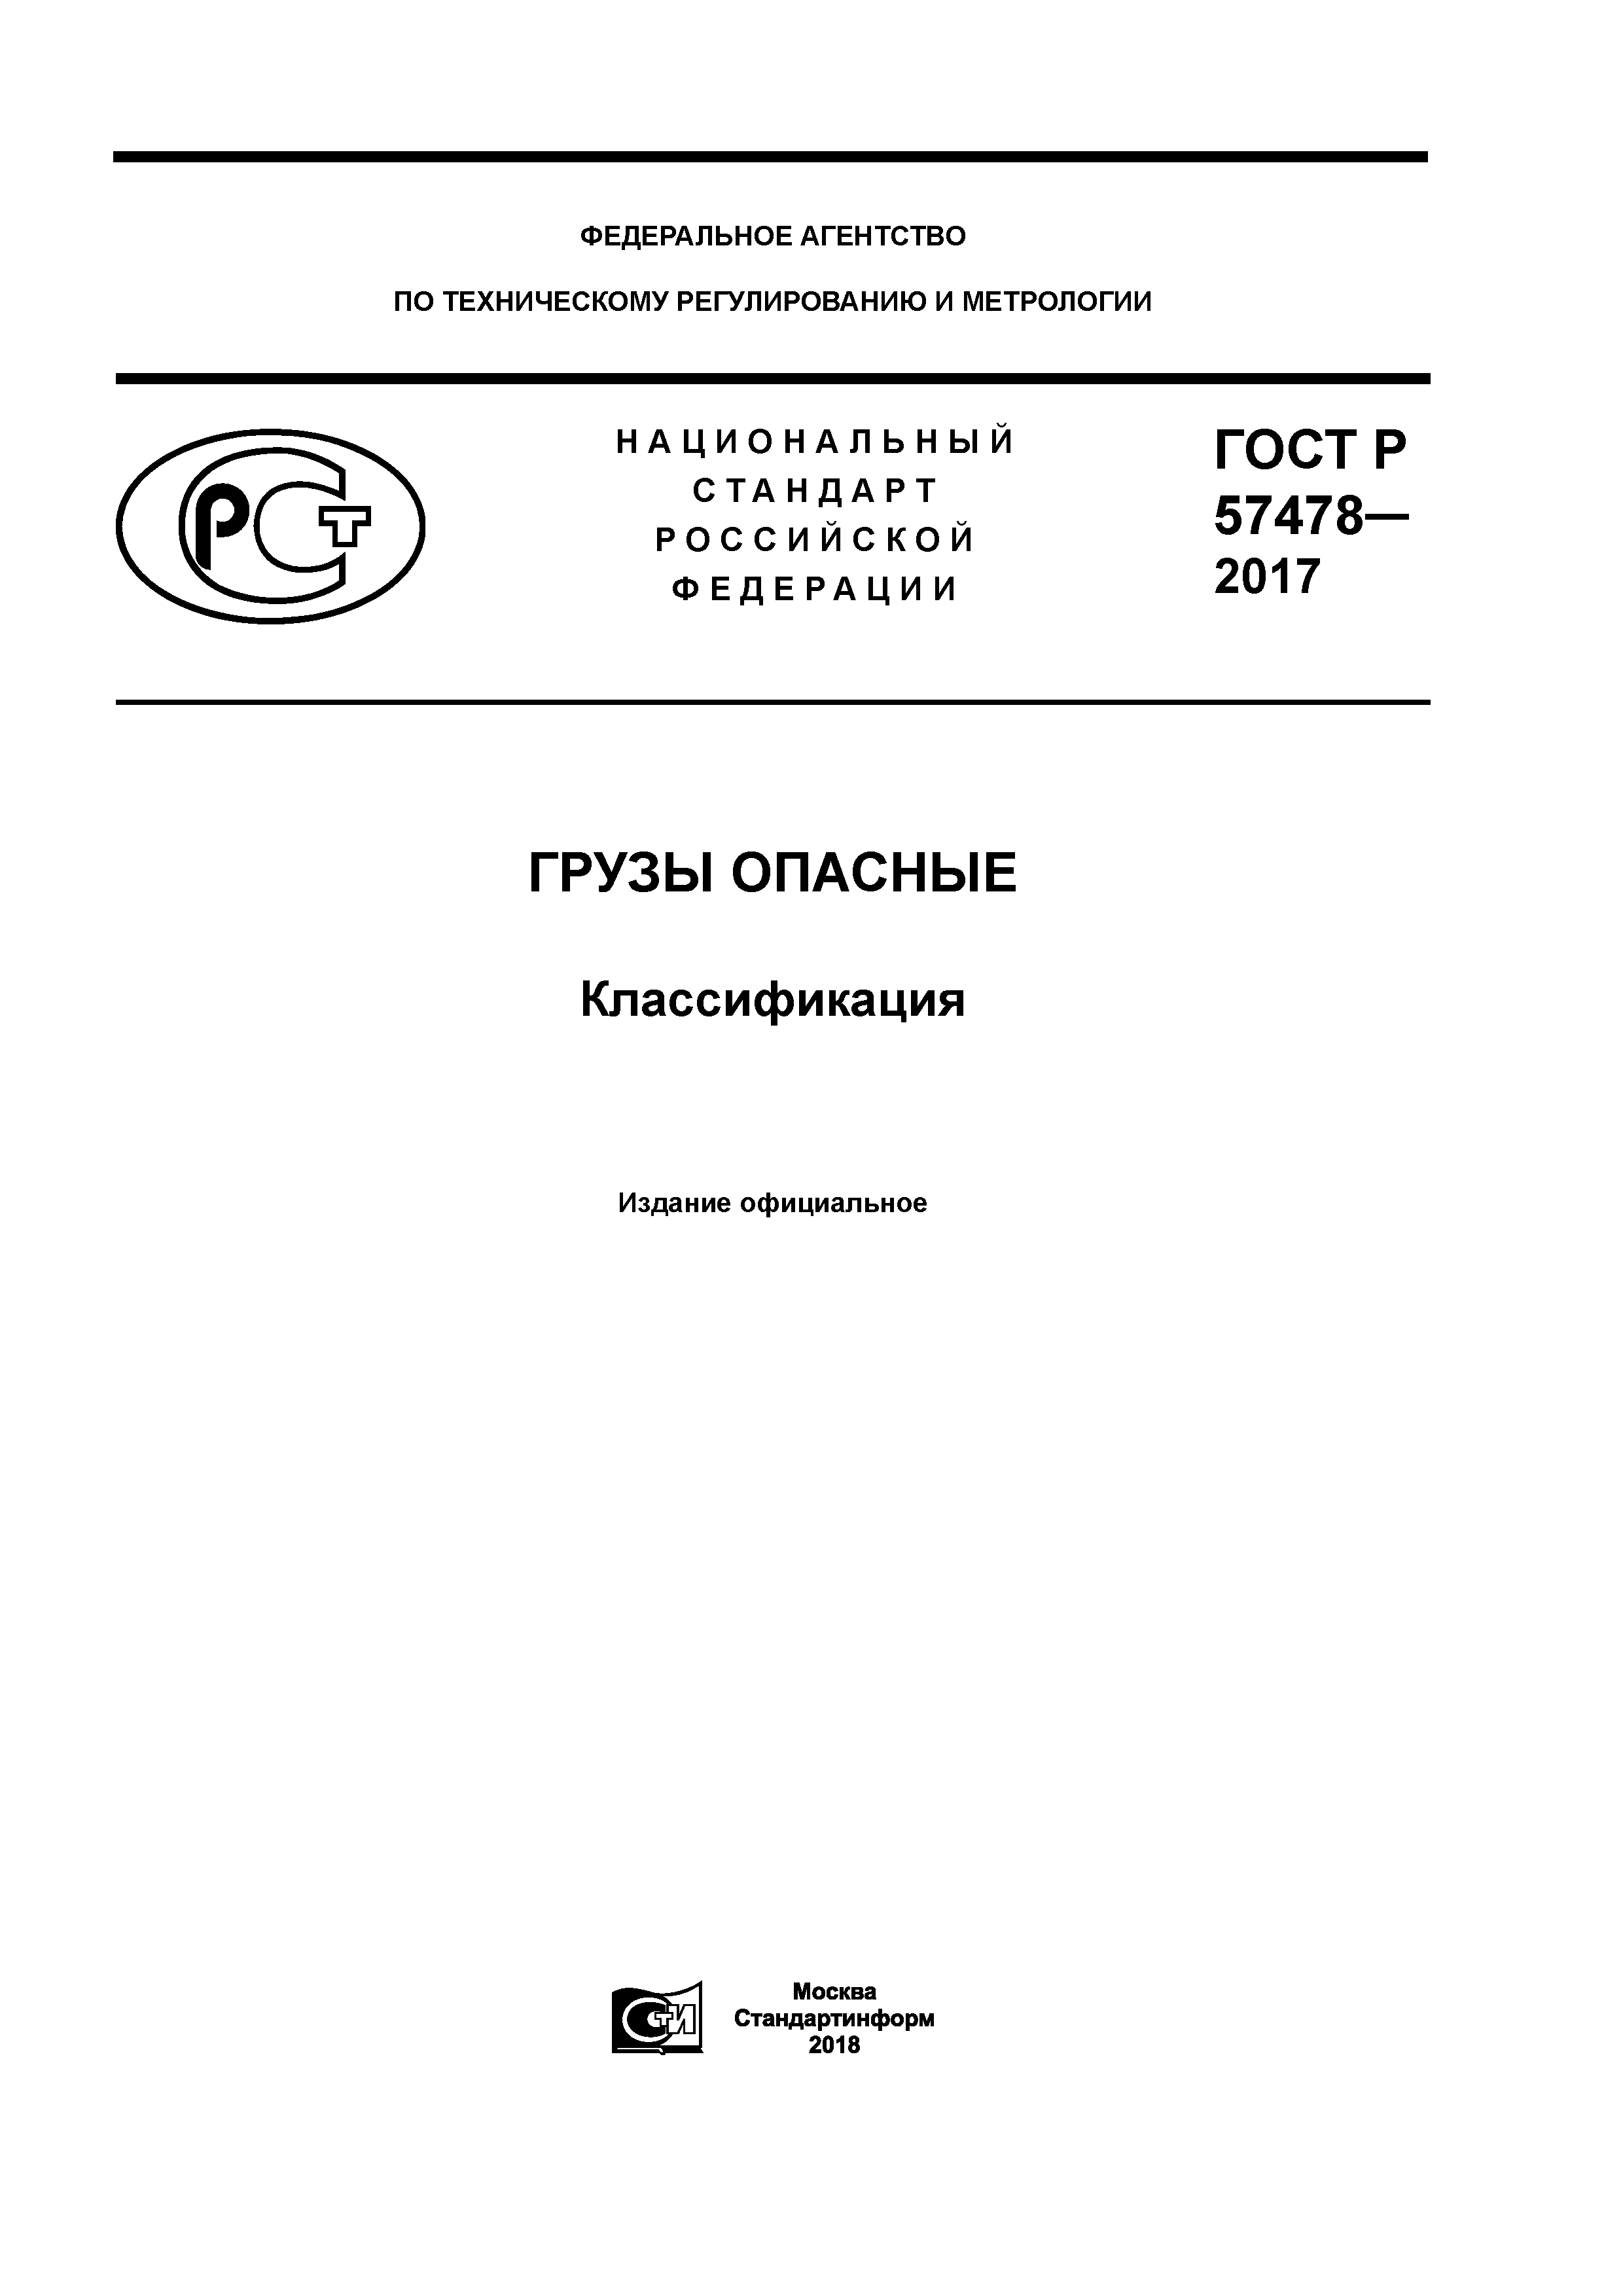 ГОСТ Р 57478-2017